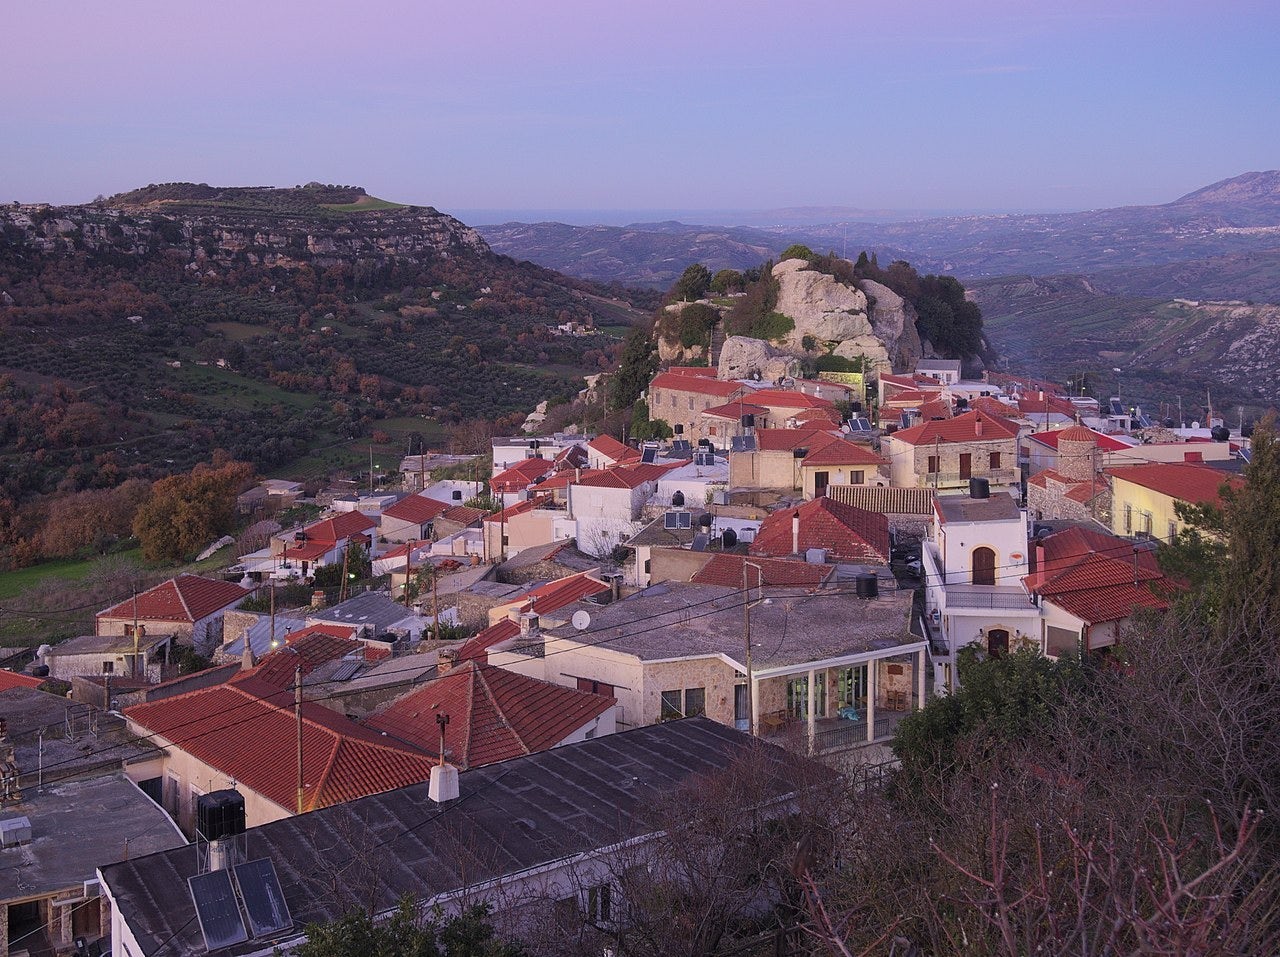 Agios Thomas: A Village Perched on Steep Cliffs